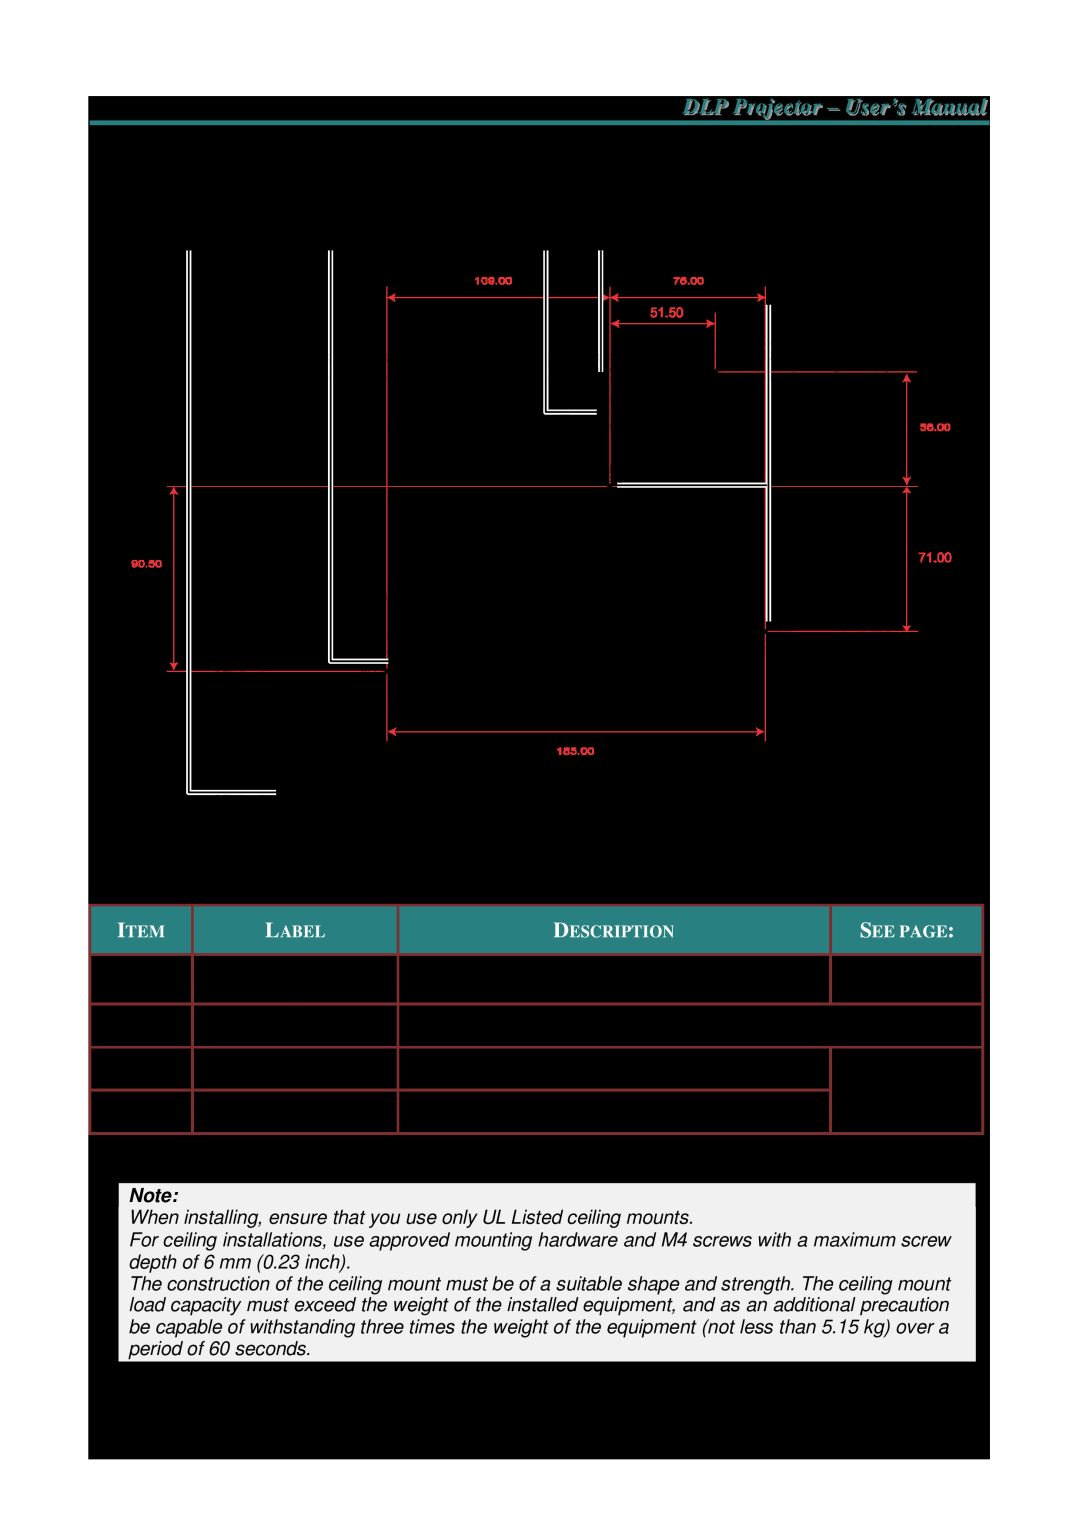 Knoll Systems HDO2200 user manual Bottom view, DLP Projjjectttor - User’s Manualll 